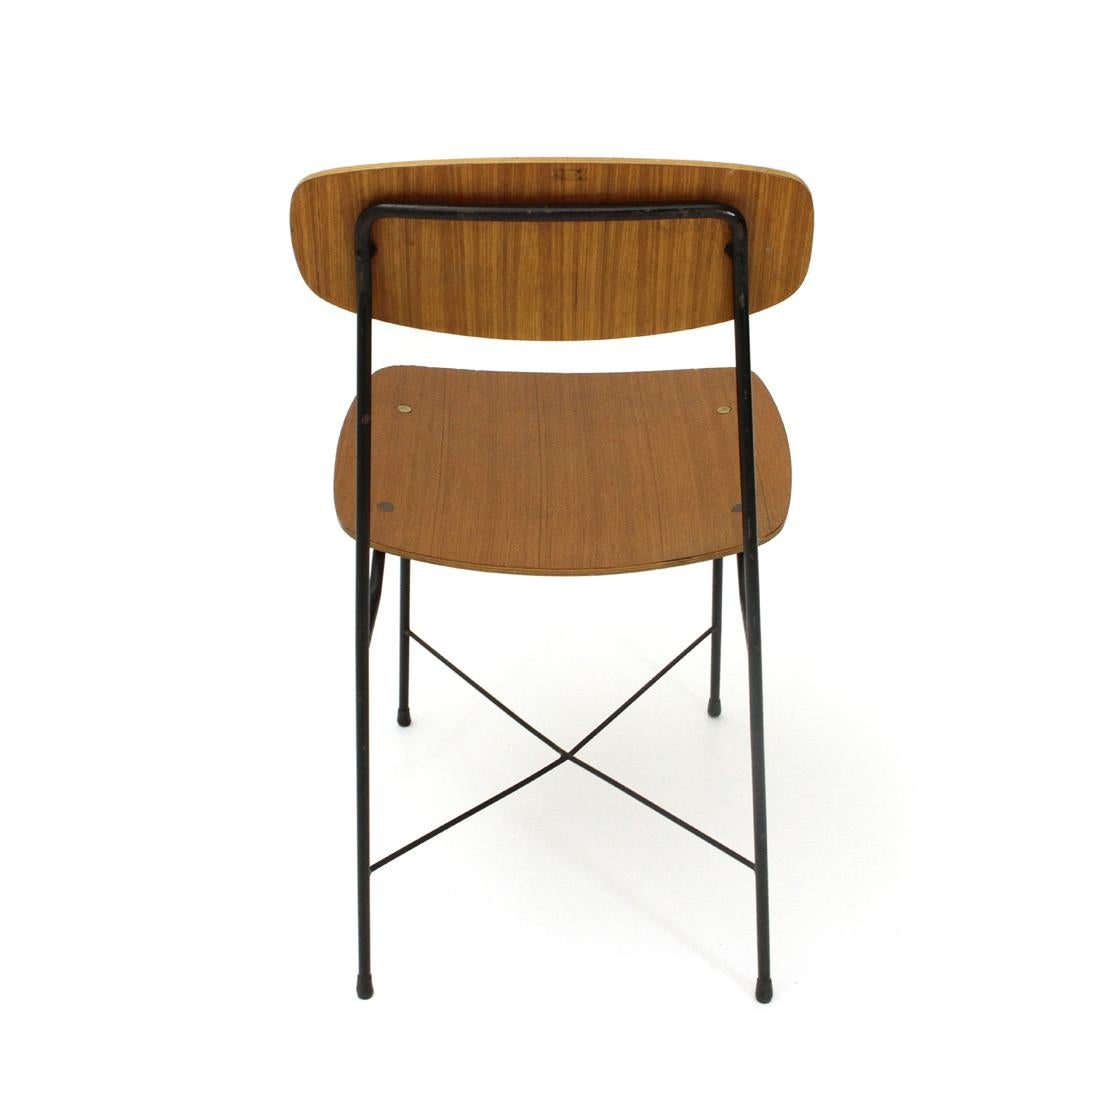 Mid-20th Century Italian Plywood Chair by George Coslin for Faram, 1950s